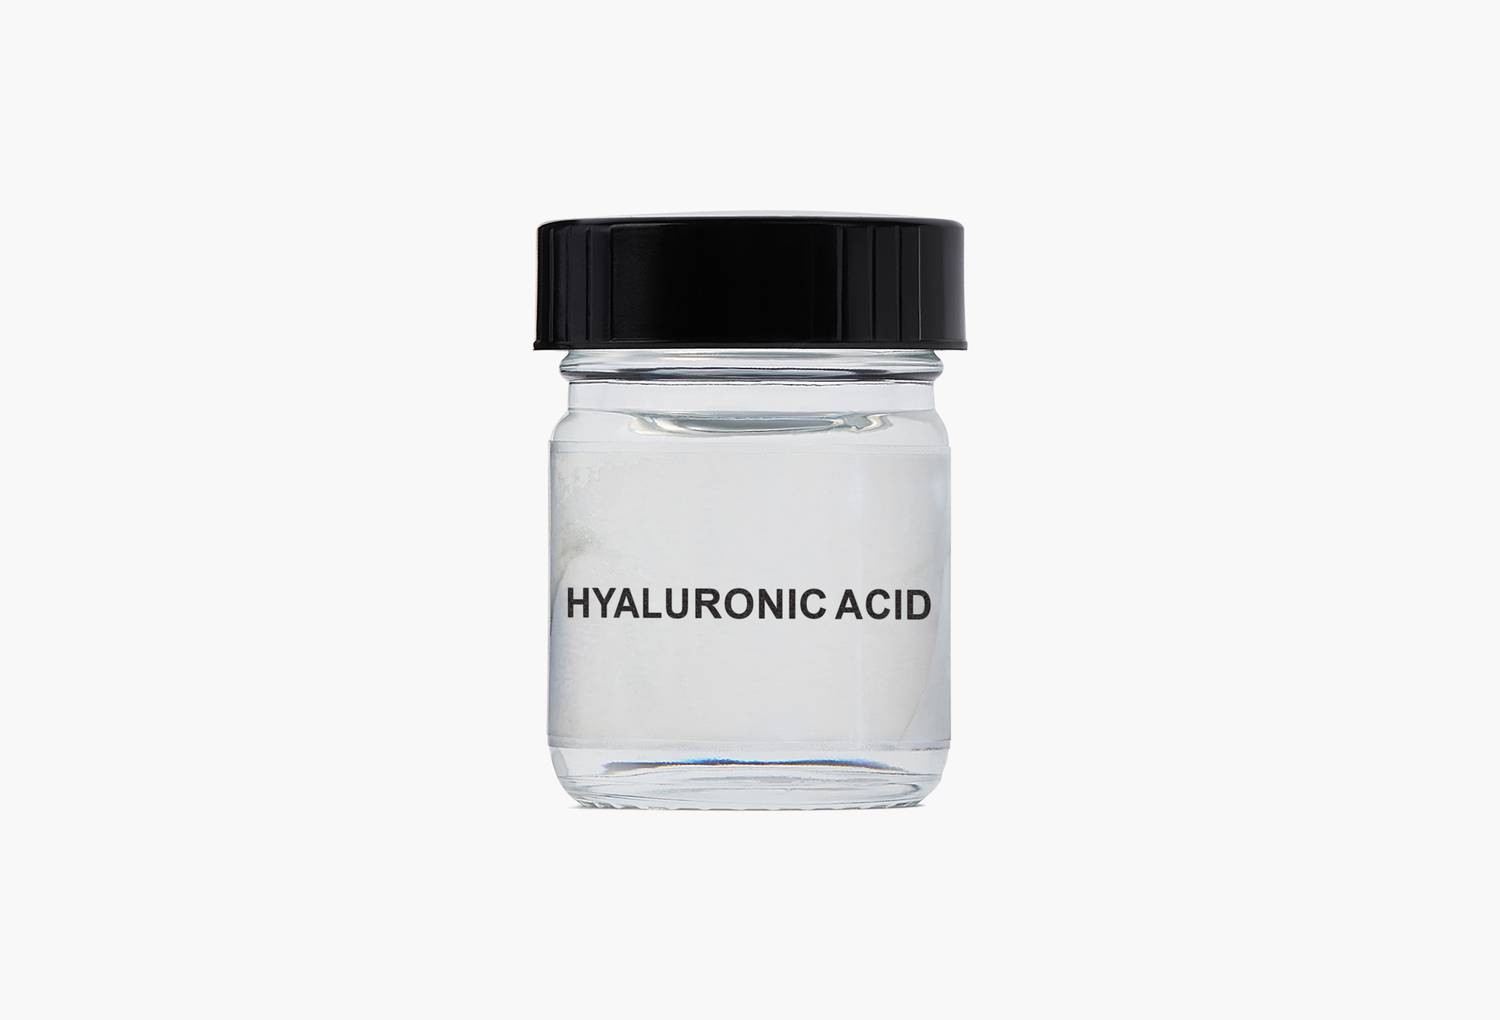 Hyaluronic Acid in natural form